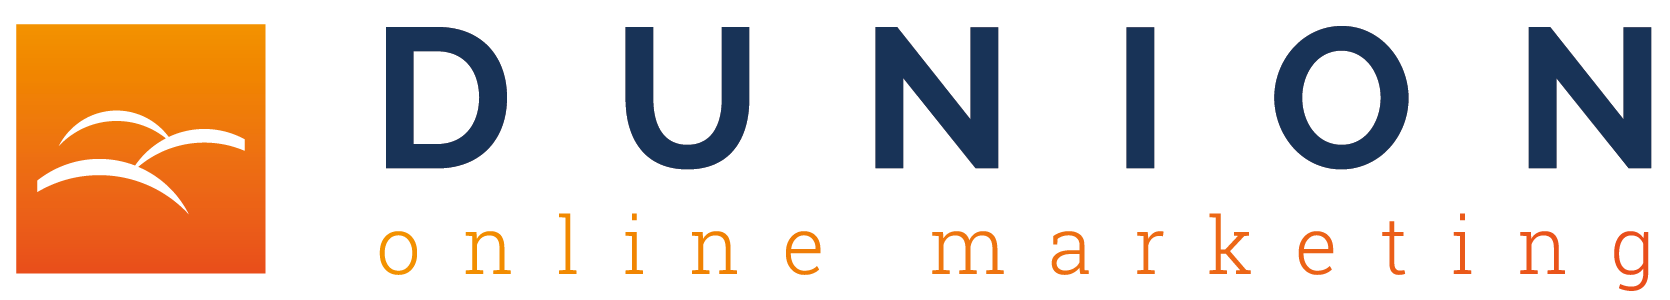 Dunion Online Marketing Logo